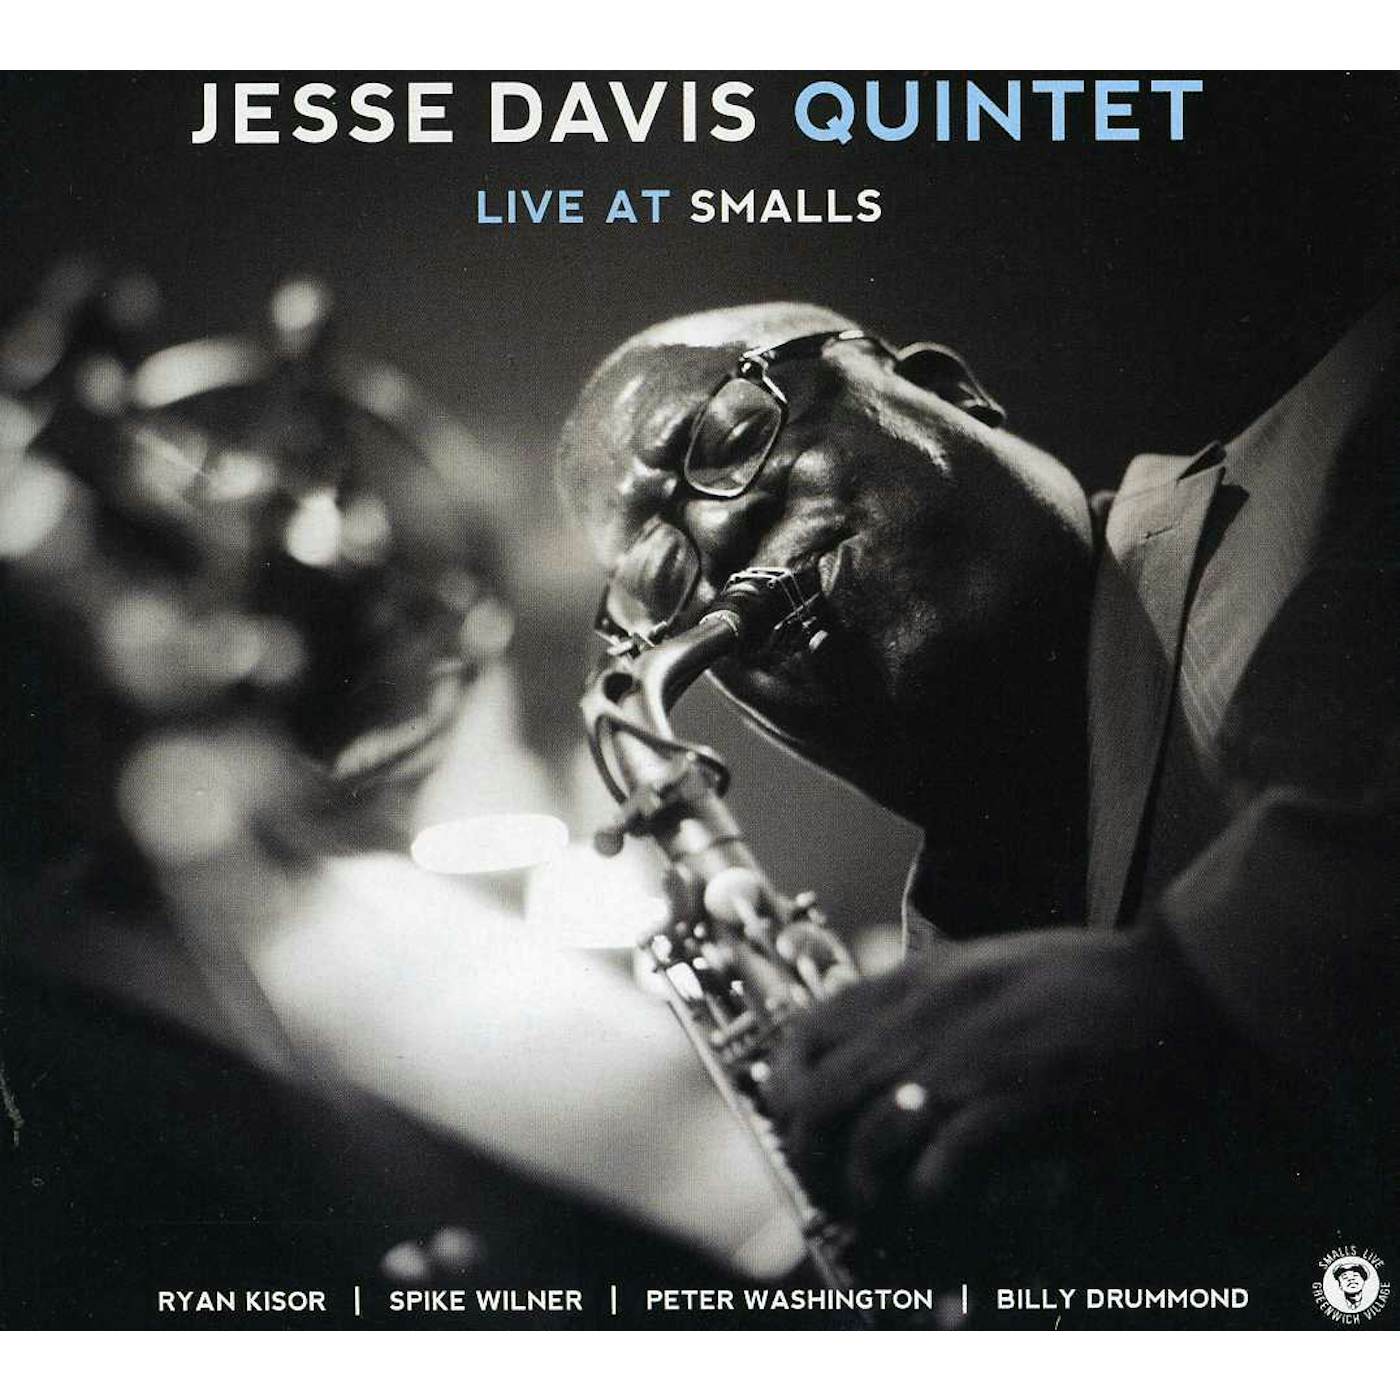 JESSE DAVIS QUINTET LIVE AT SMALLS CD